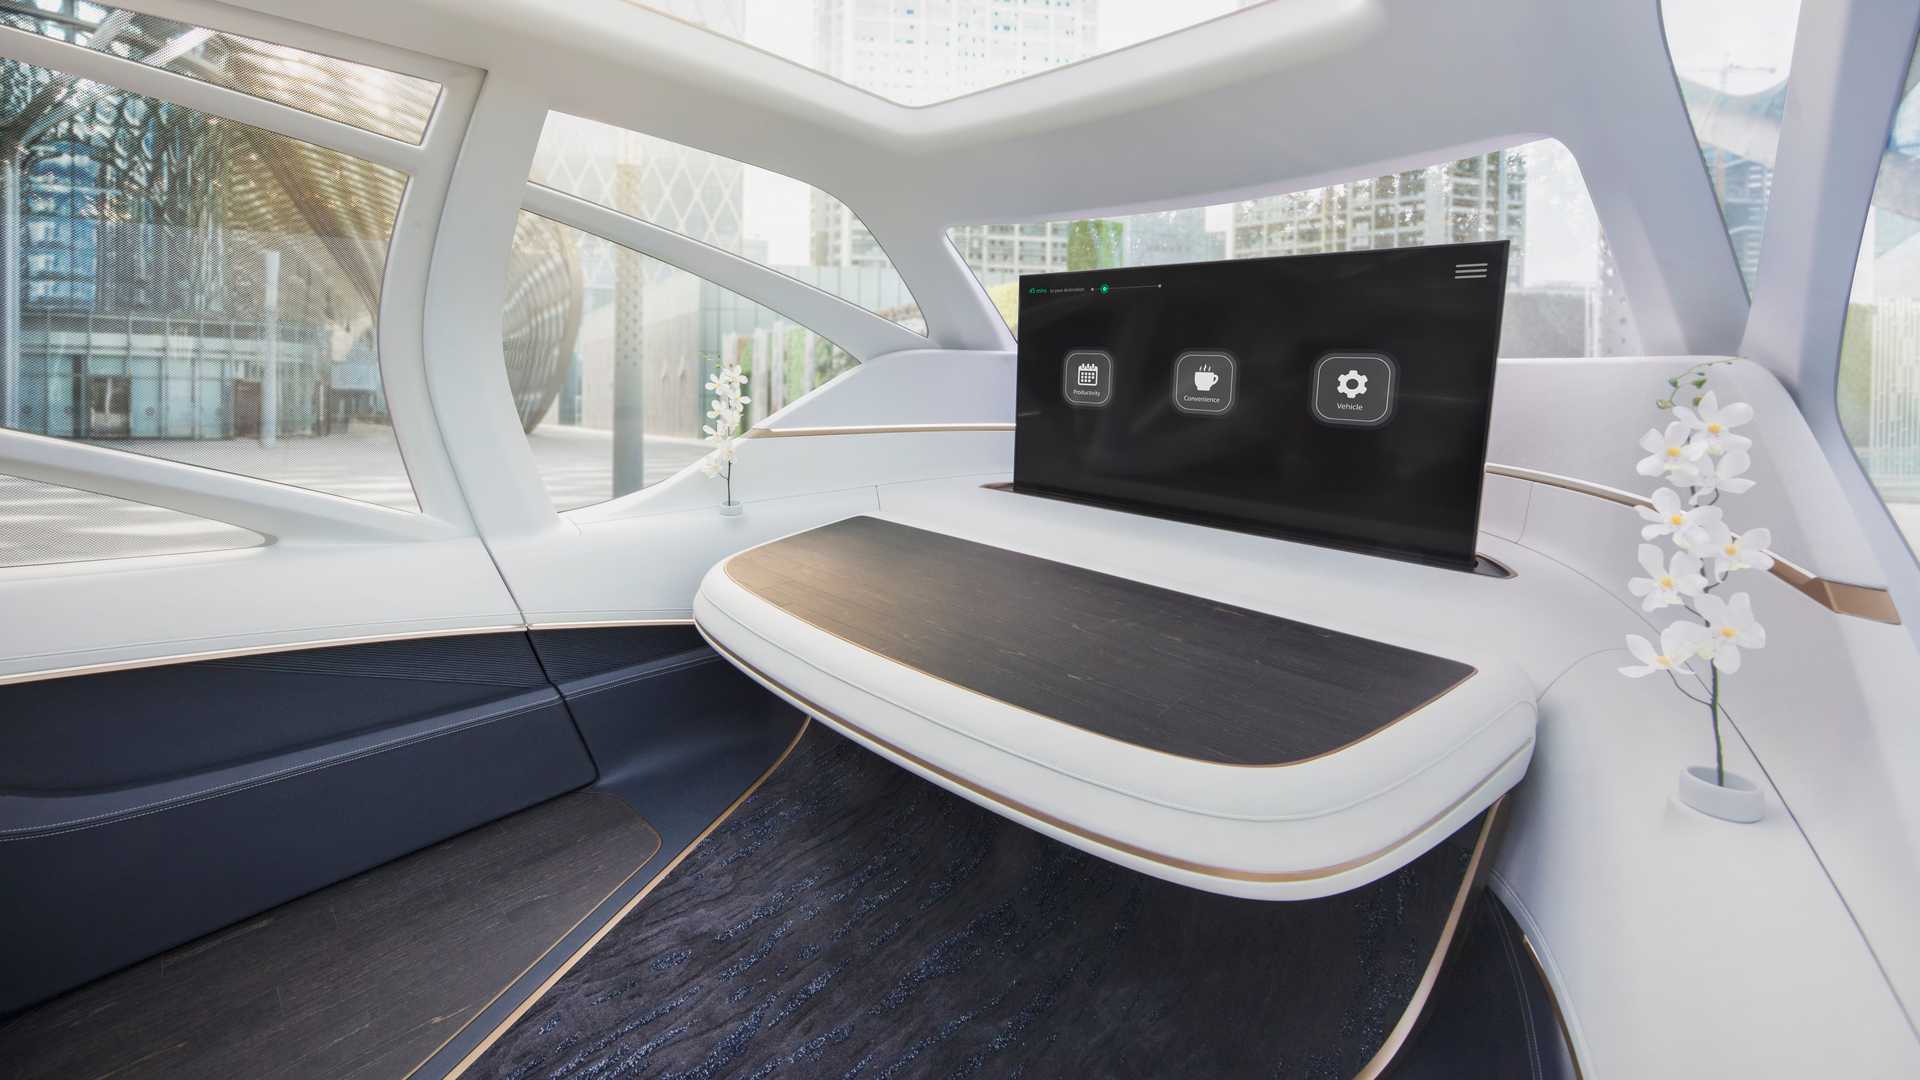 buick-smart-pod-concept-interior3.jpeg